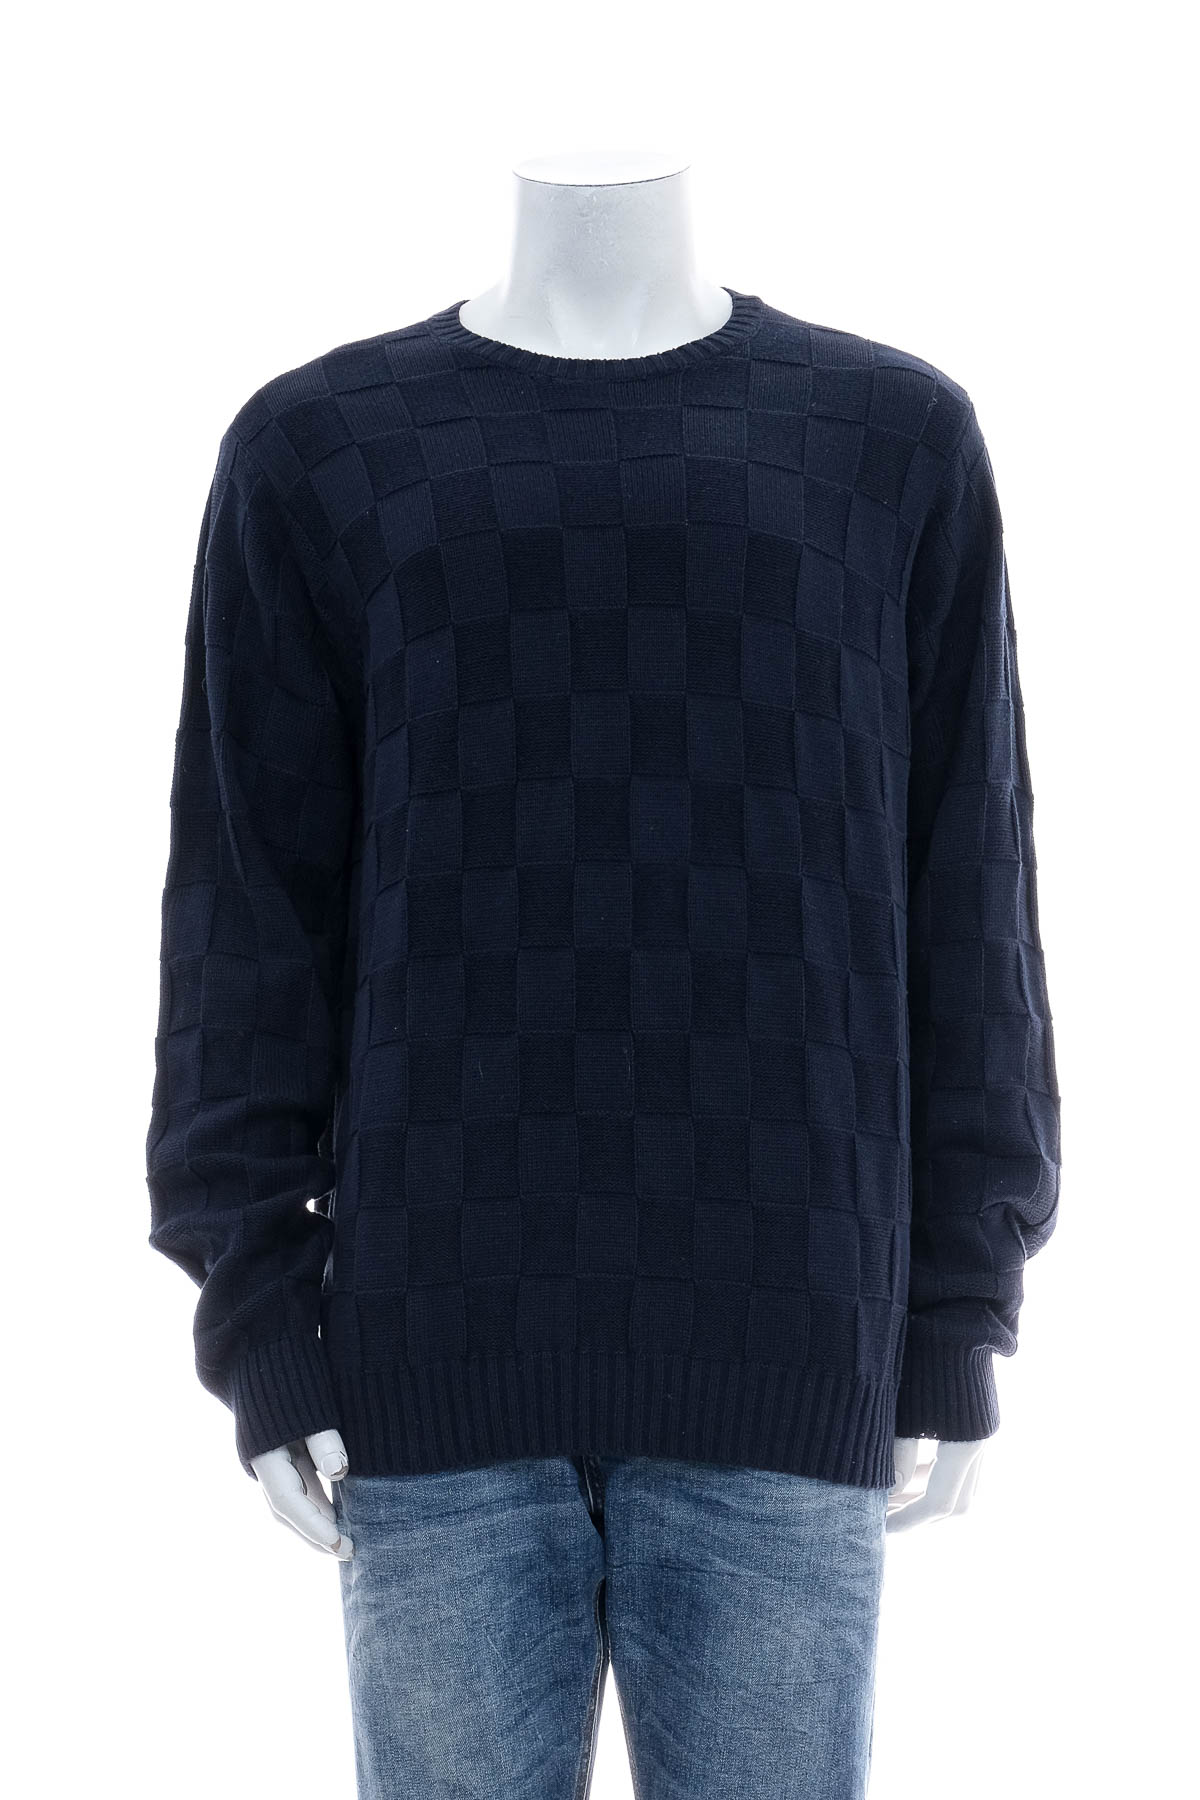 Men's sweater - IZOD - 0